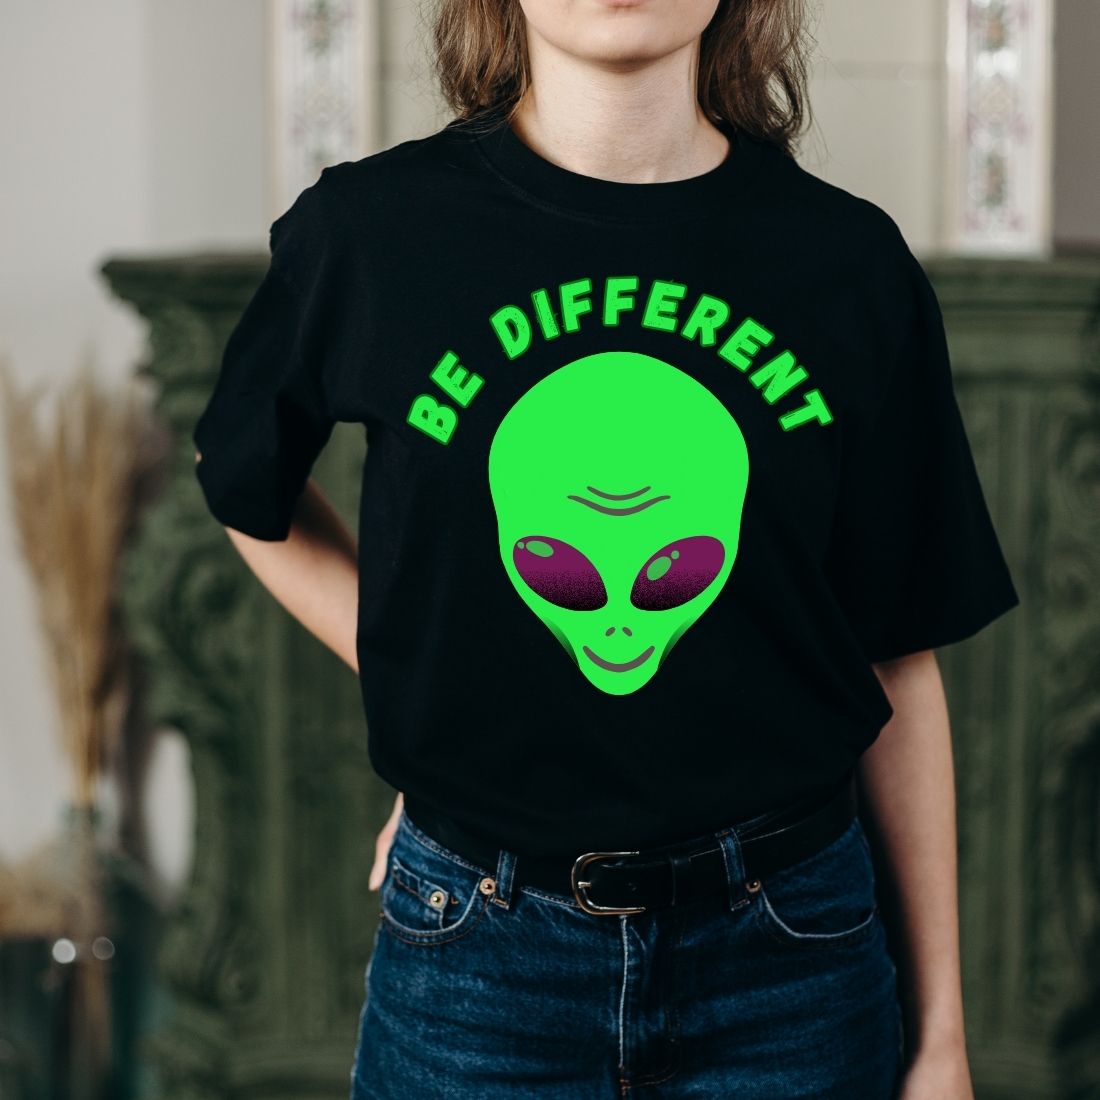 Alien t shirt design cover image.